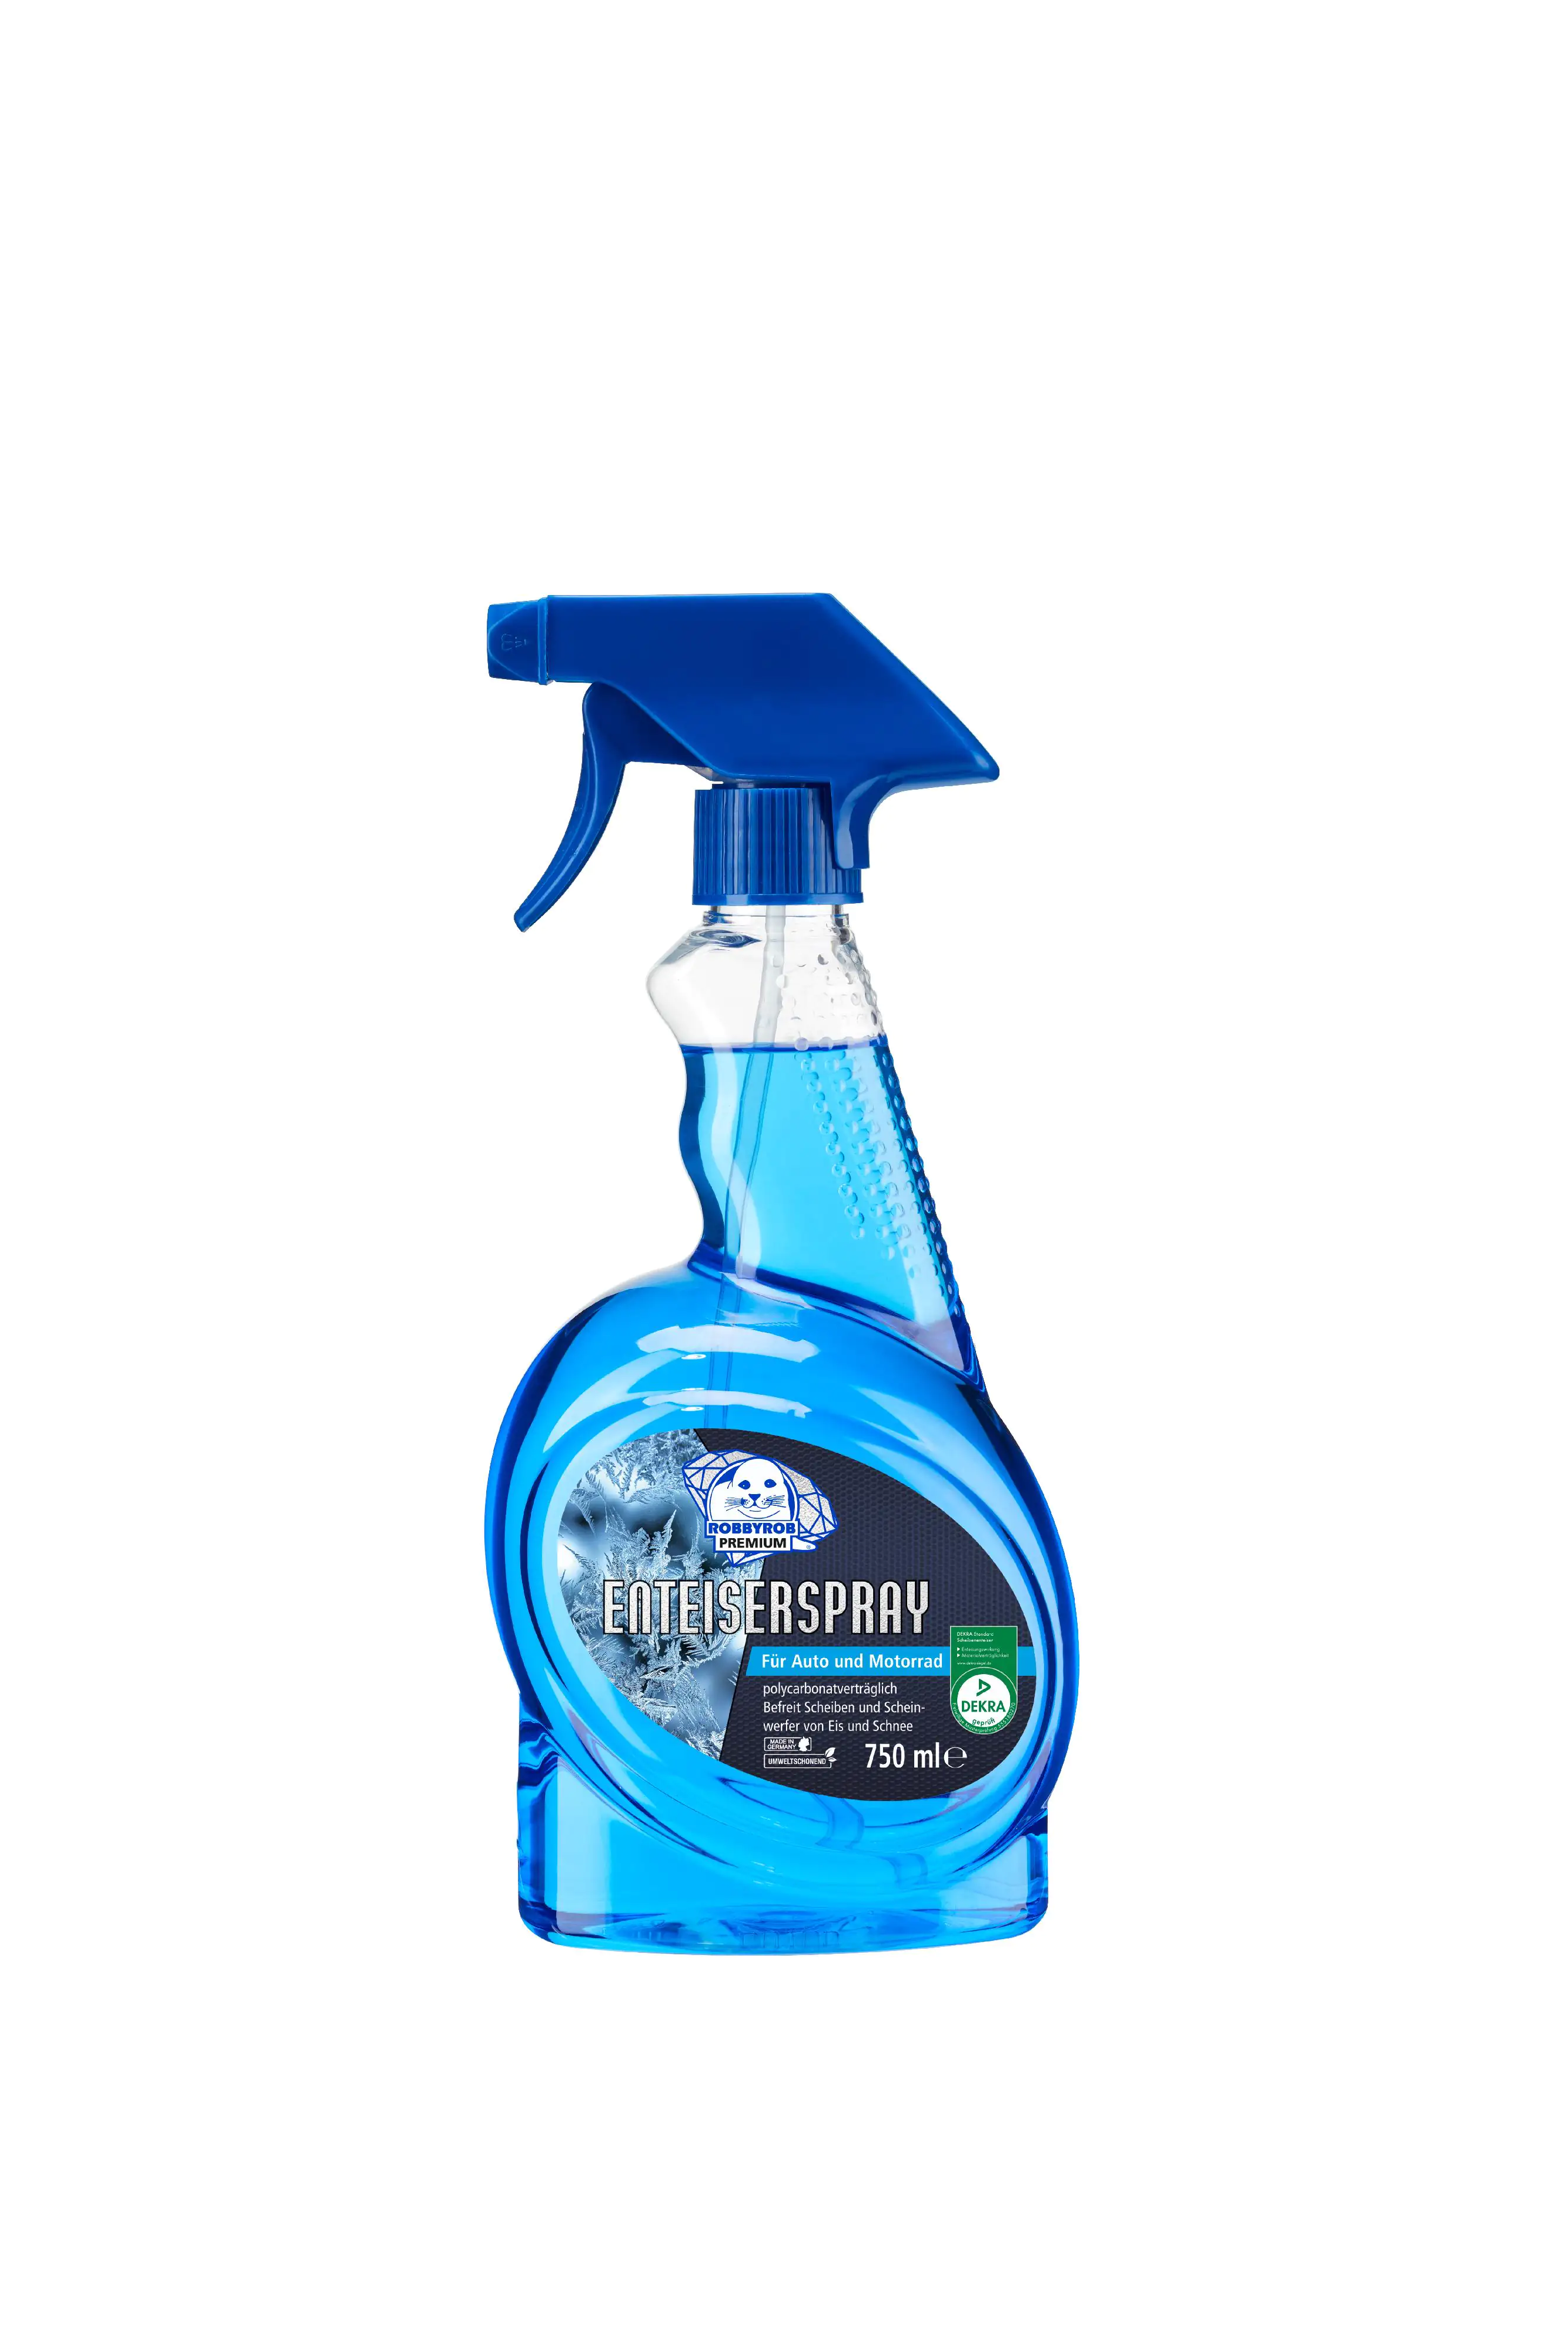 Robbyrob Scheibenenteiser-Spray (500 ml) ab 2,52